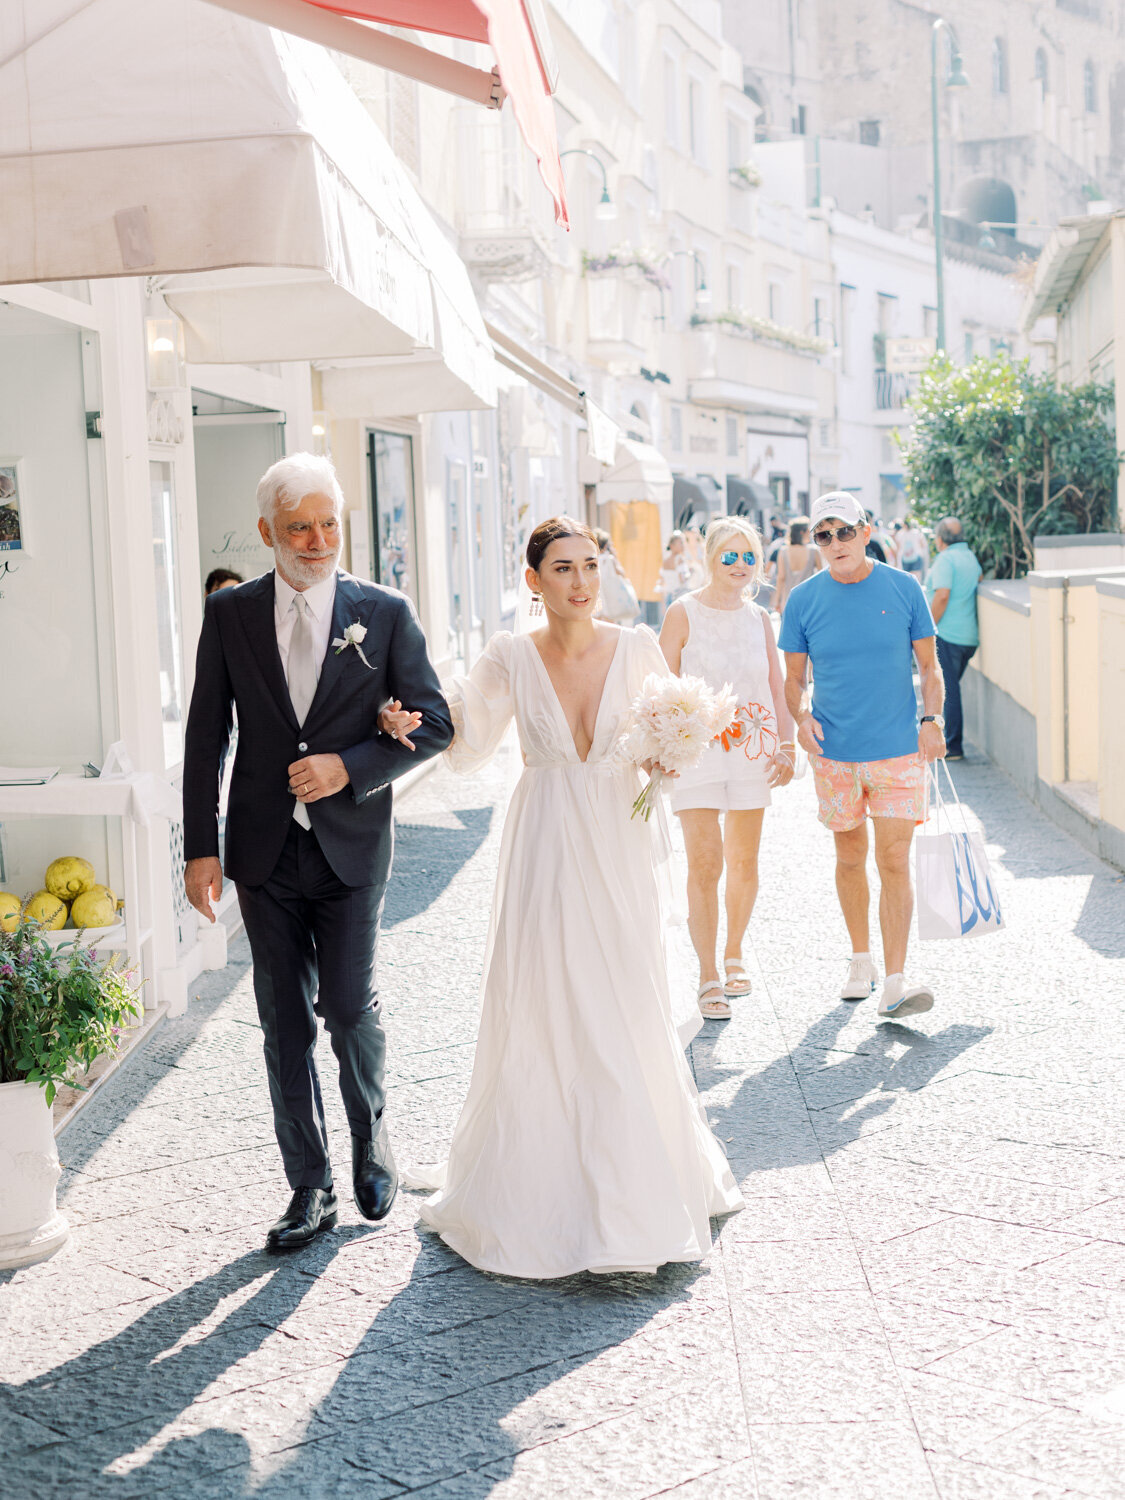 Getting married in Capri